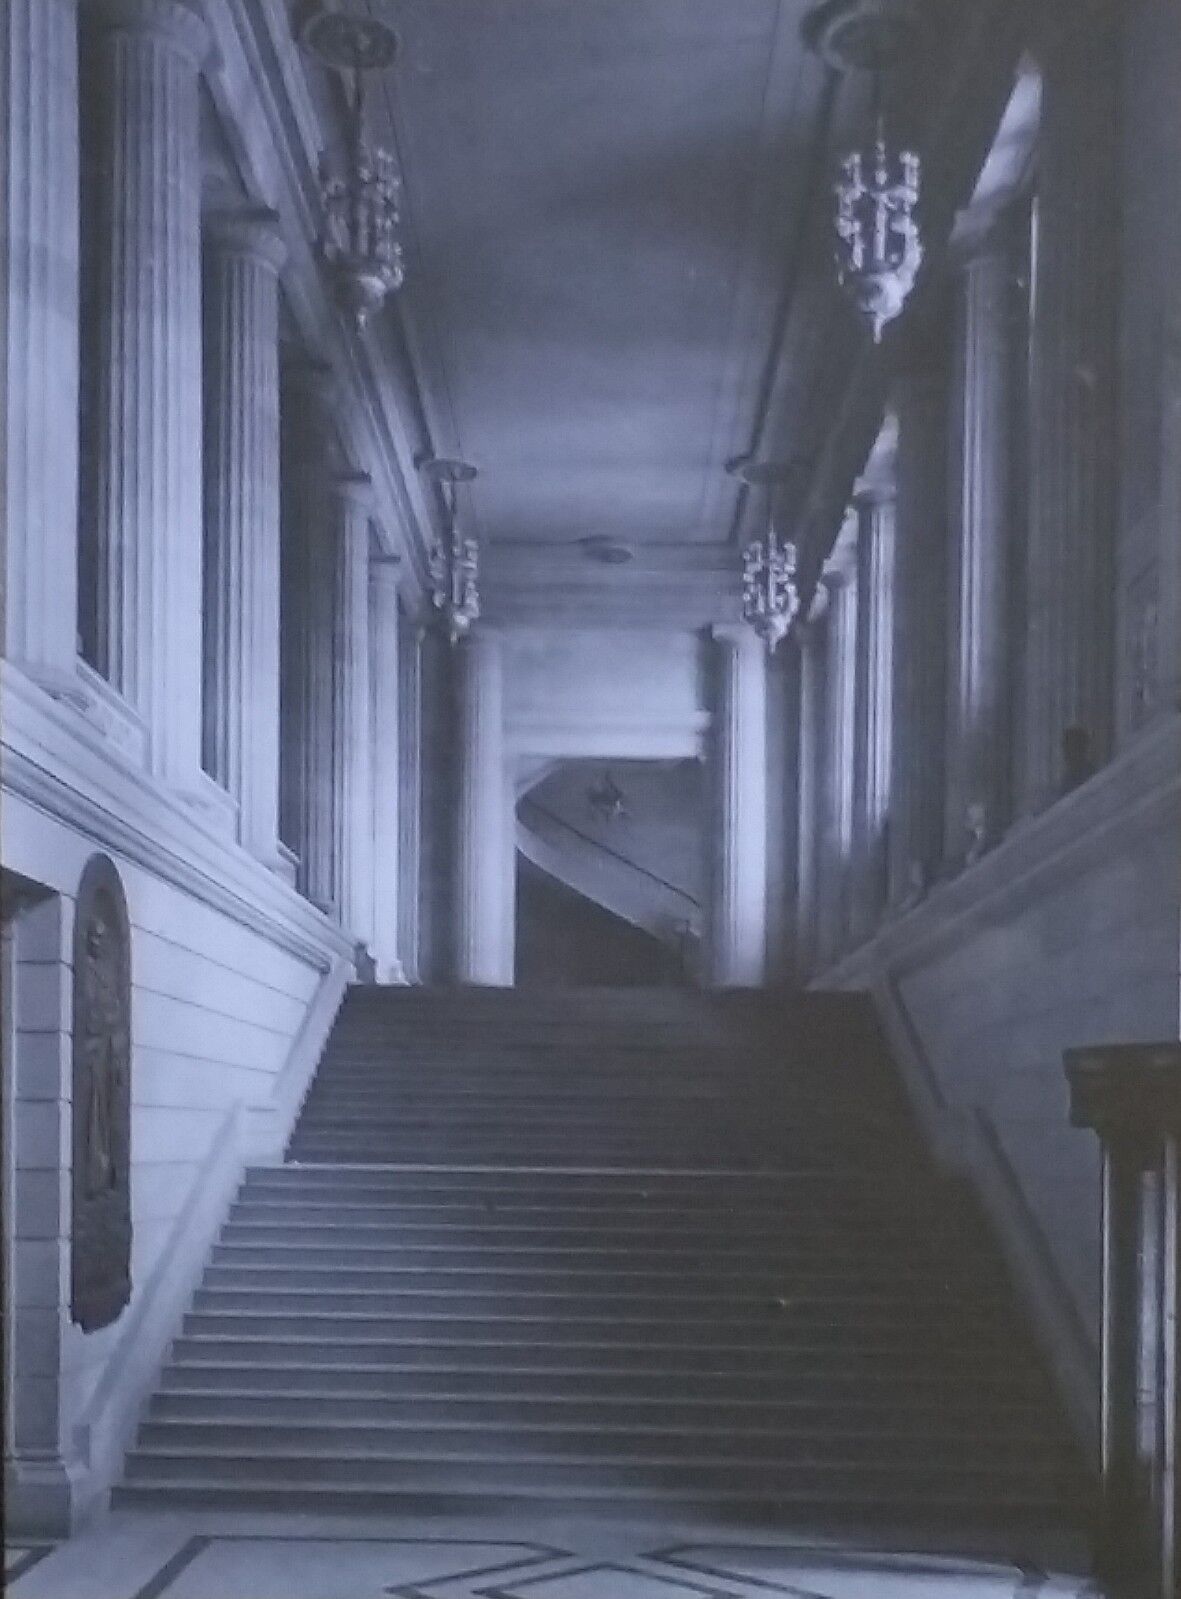 1927, Stairs, State Education Bldg, Albany, New York, Magic Lantern Glass Slide